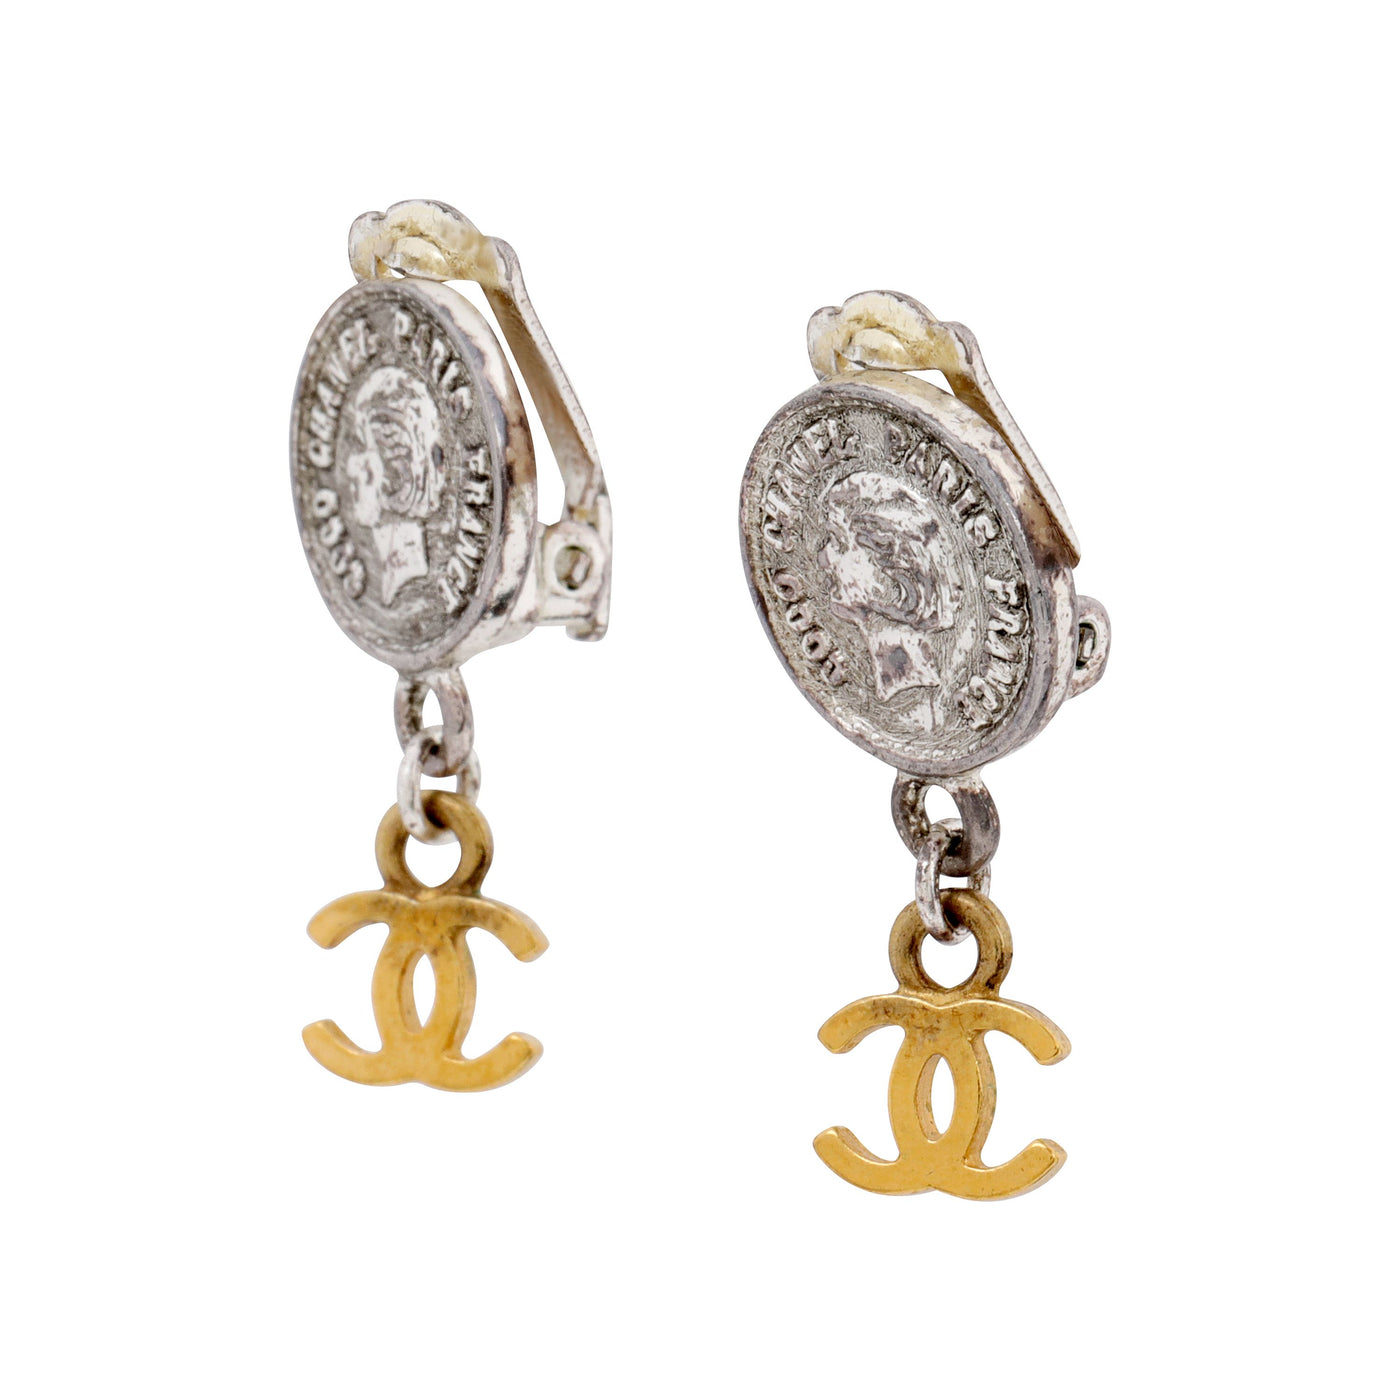 Chanel Silver Coin w/ Gold CC Dangle Earrings